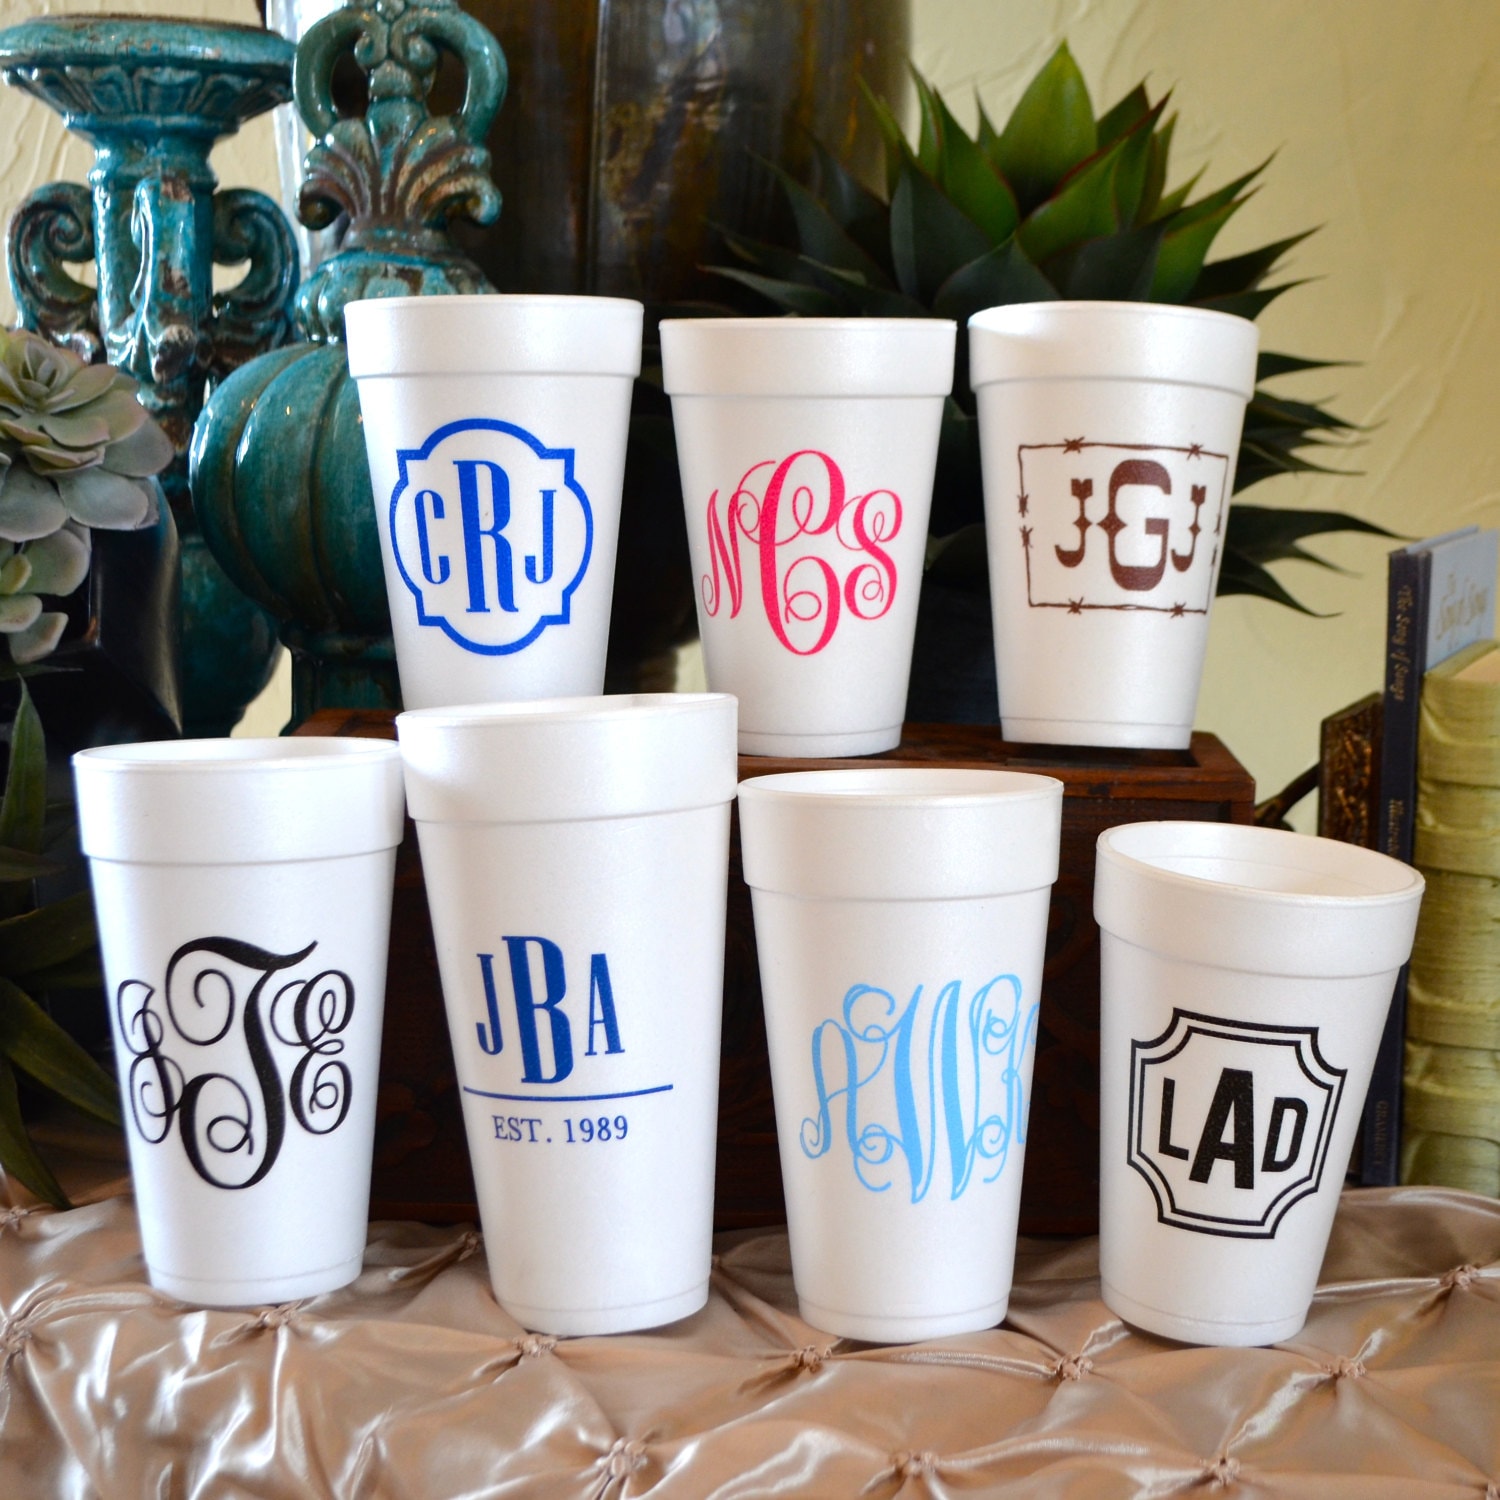 24oz Custom Printed Styrofoam Cups 500ct